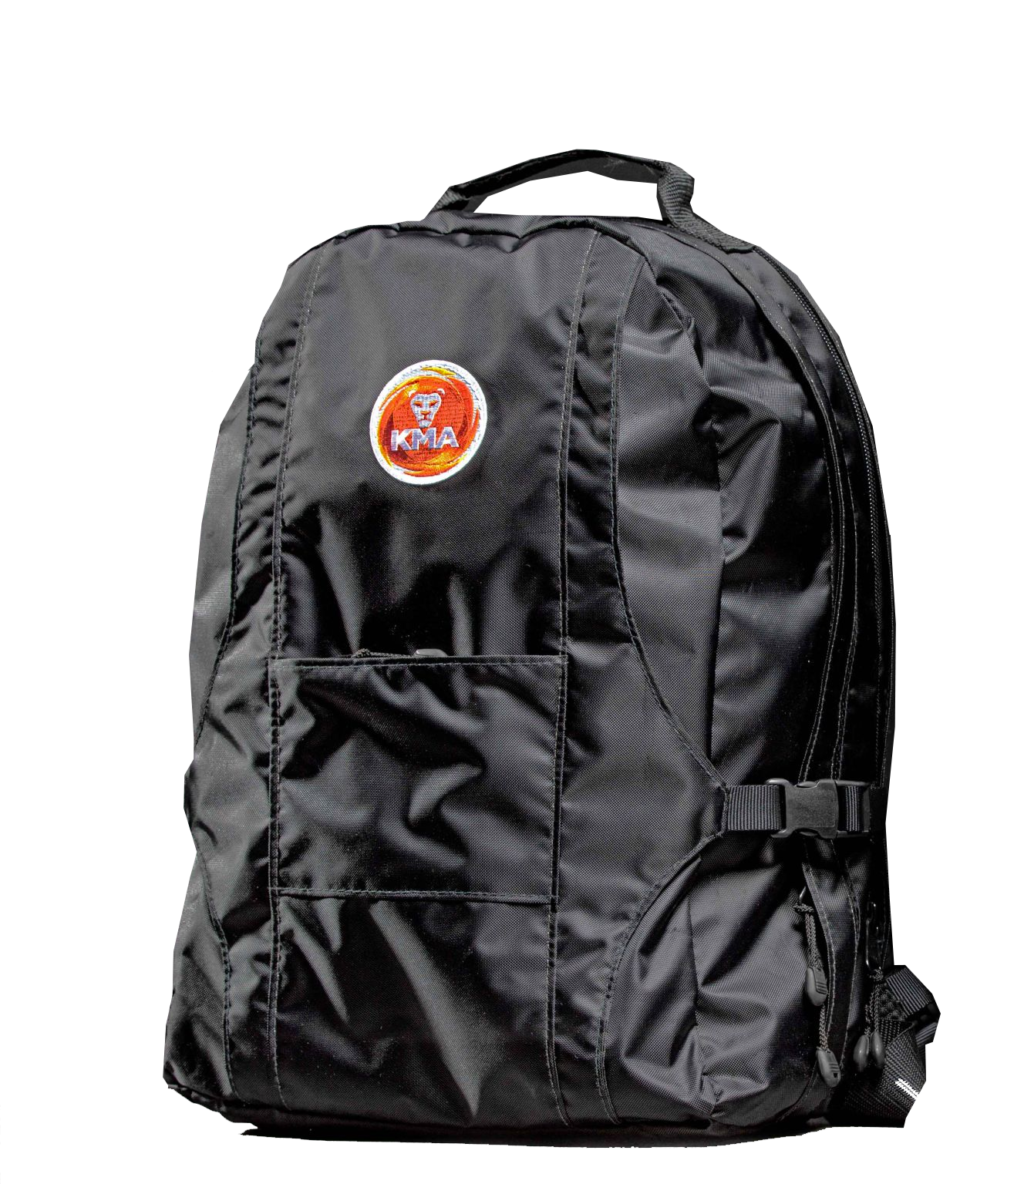 Mil-EXP Backpack